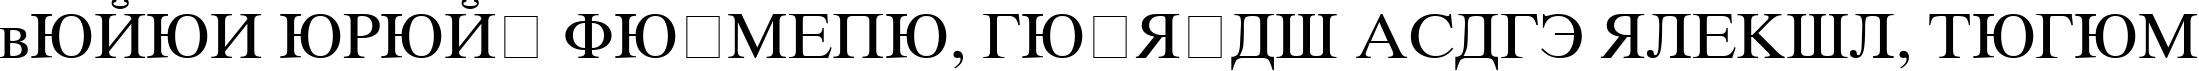 Пример написания шрифтом KOI8 Times текста на белорусском